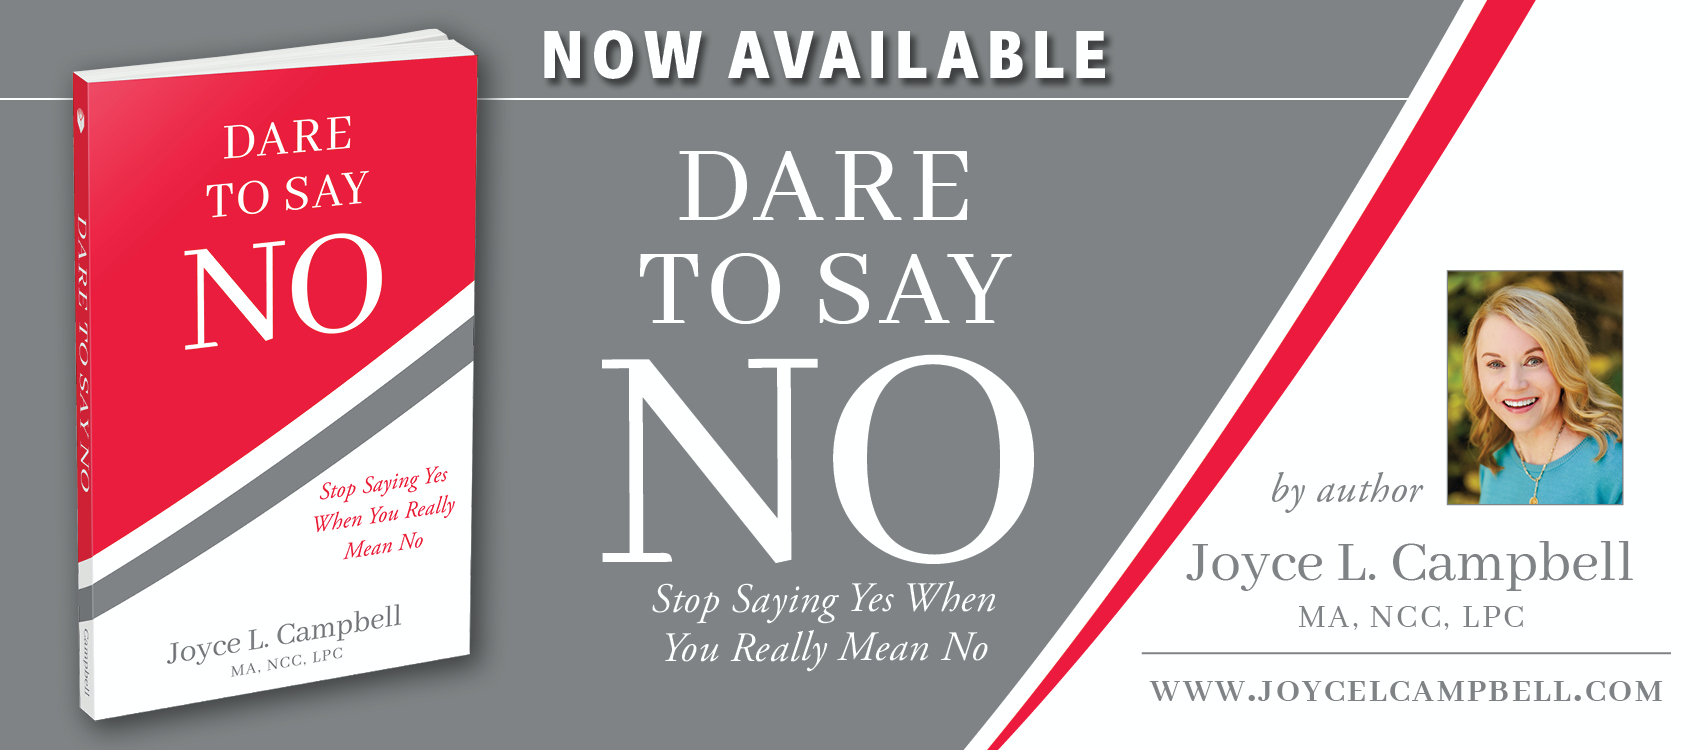 Joyce L. Campbell - Dare To Say No